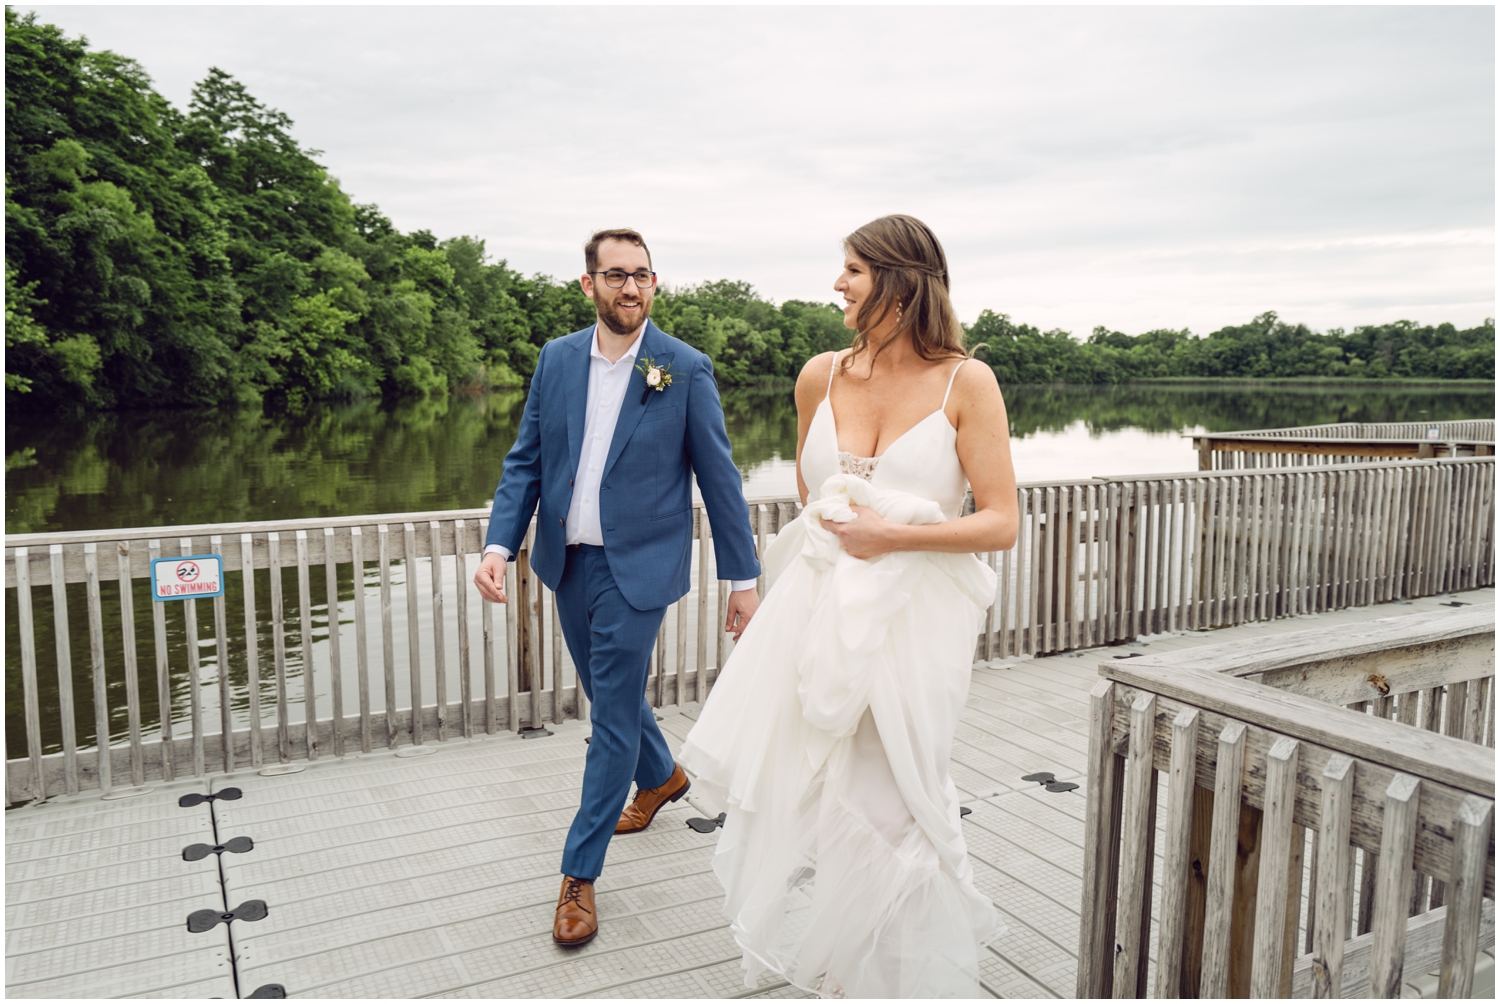 A couple in wedding attire runs up the walkway beside a reservoir.